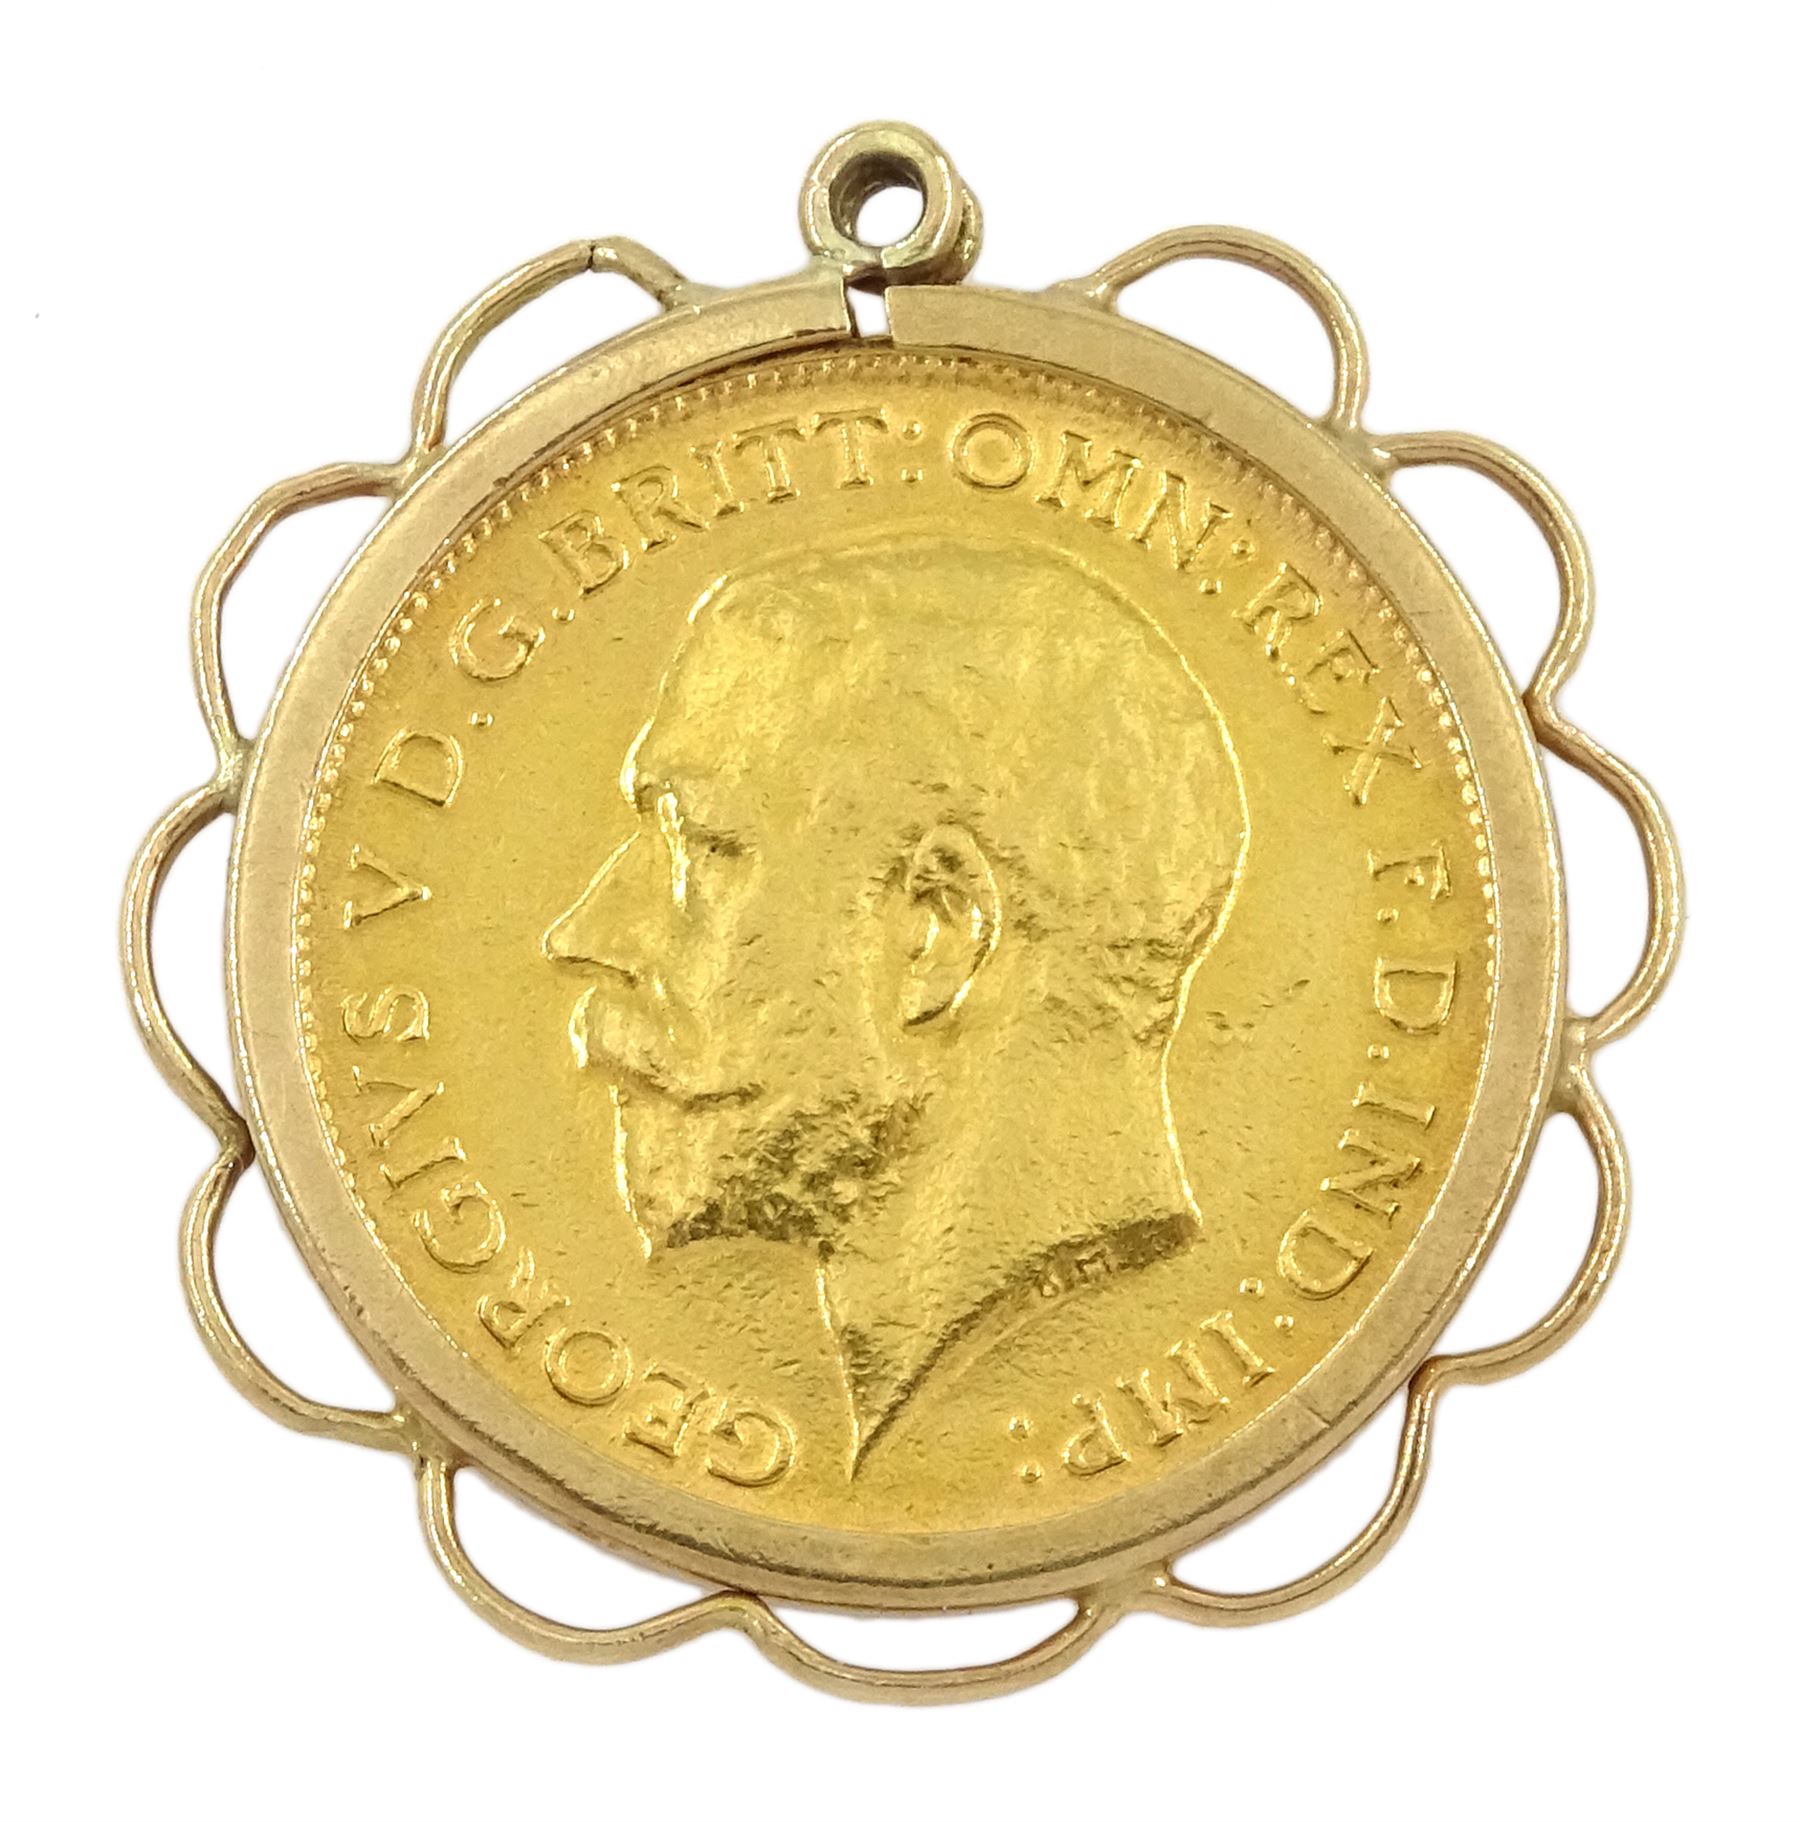 King George V 1925 gold half sovereign coin